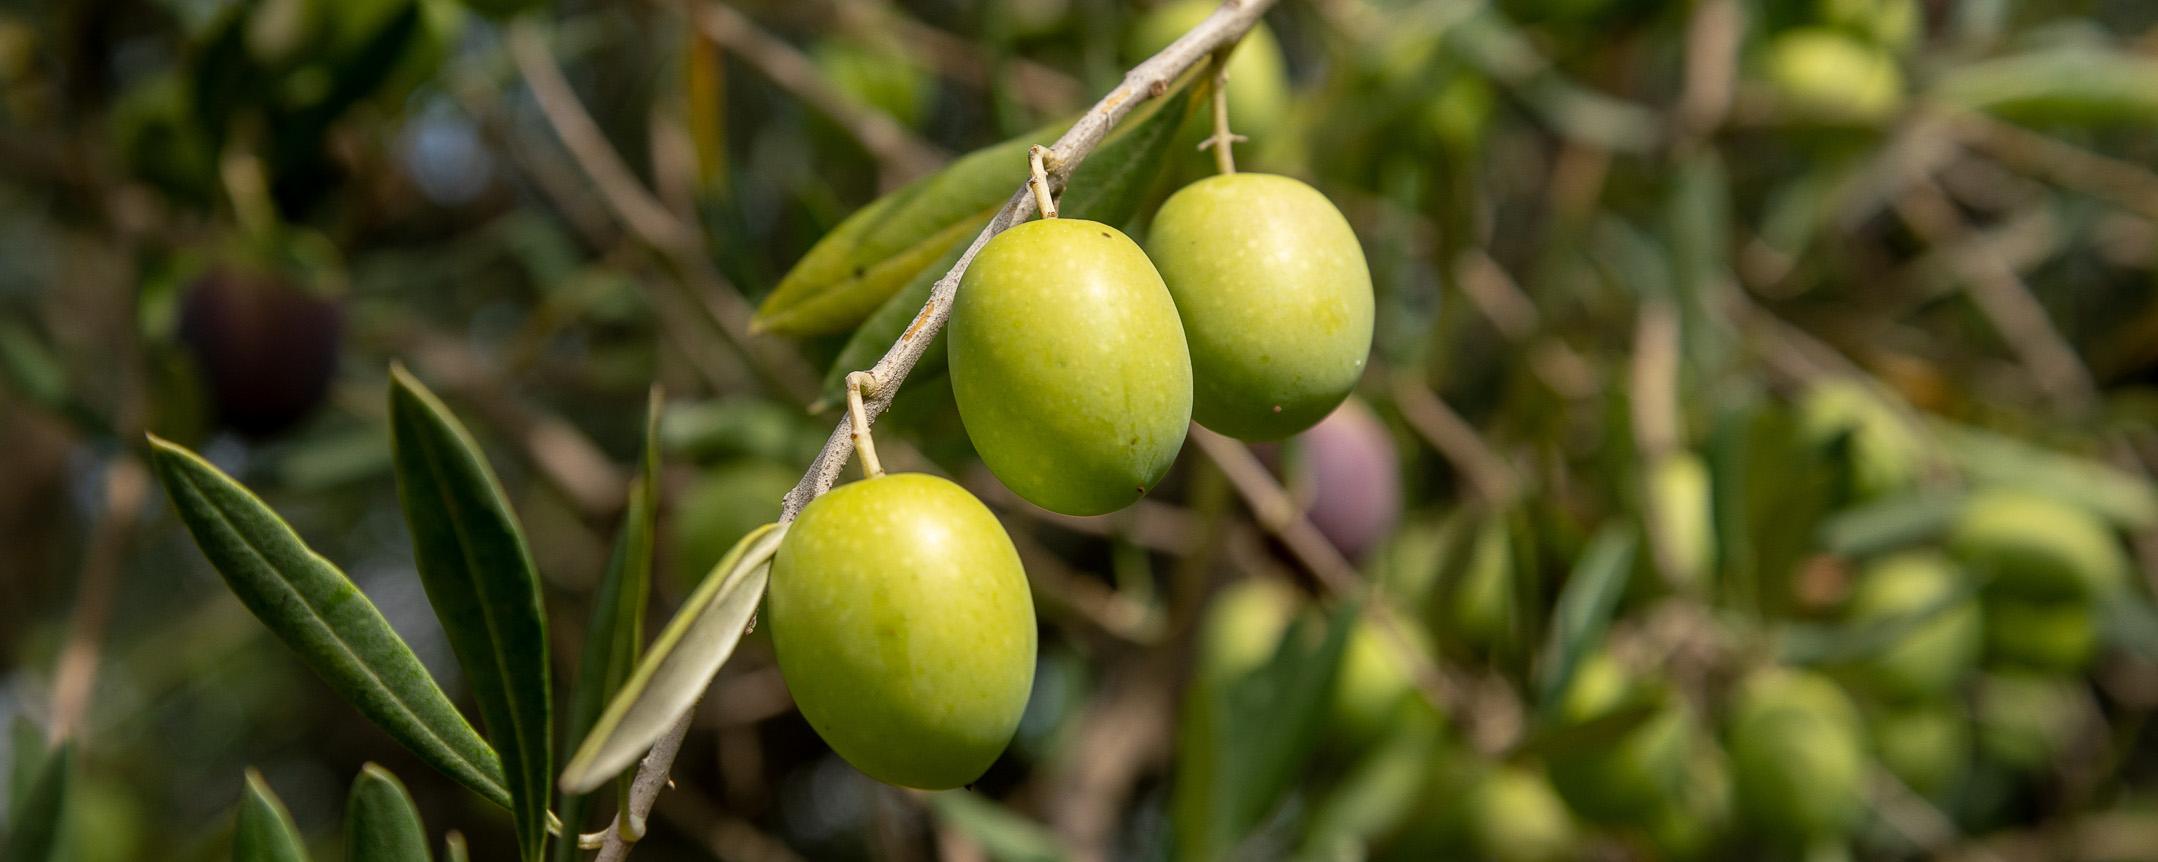 Oliven 2021 sizilien olio costa olivenoel